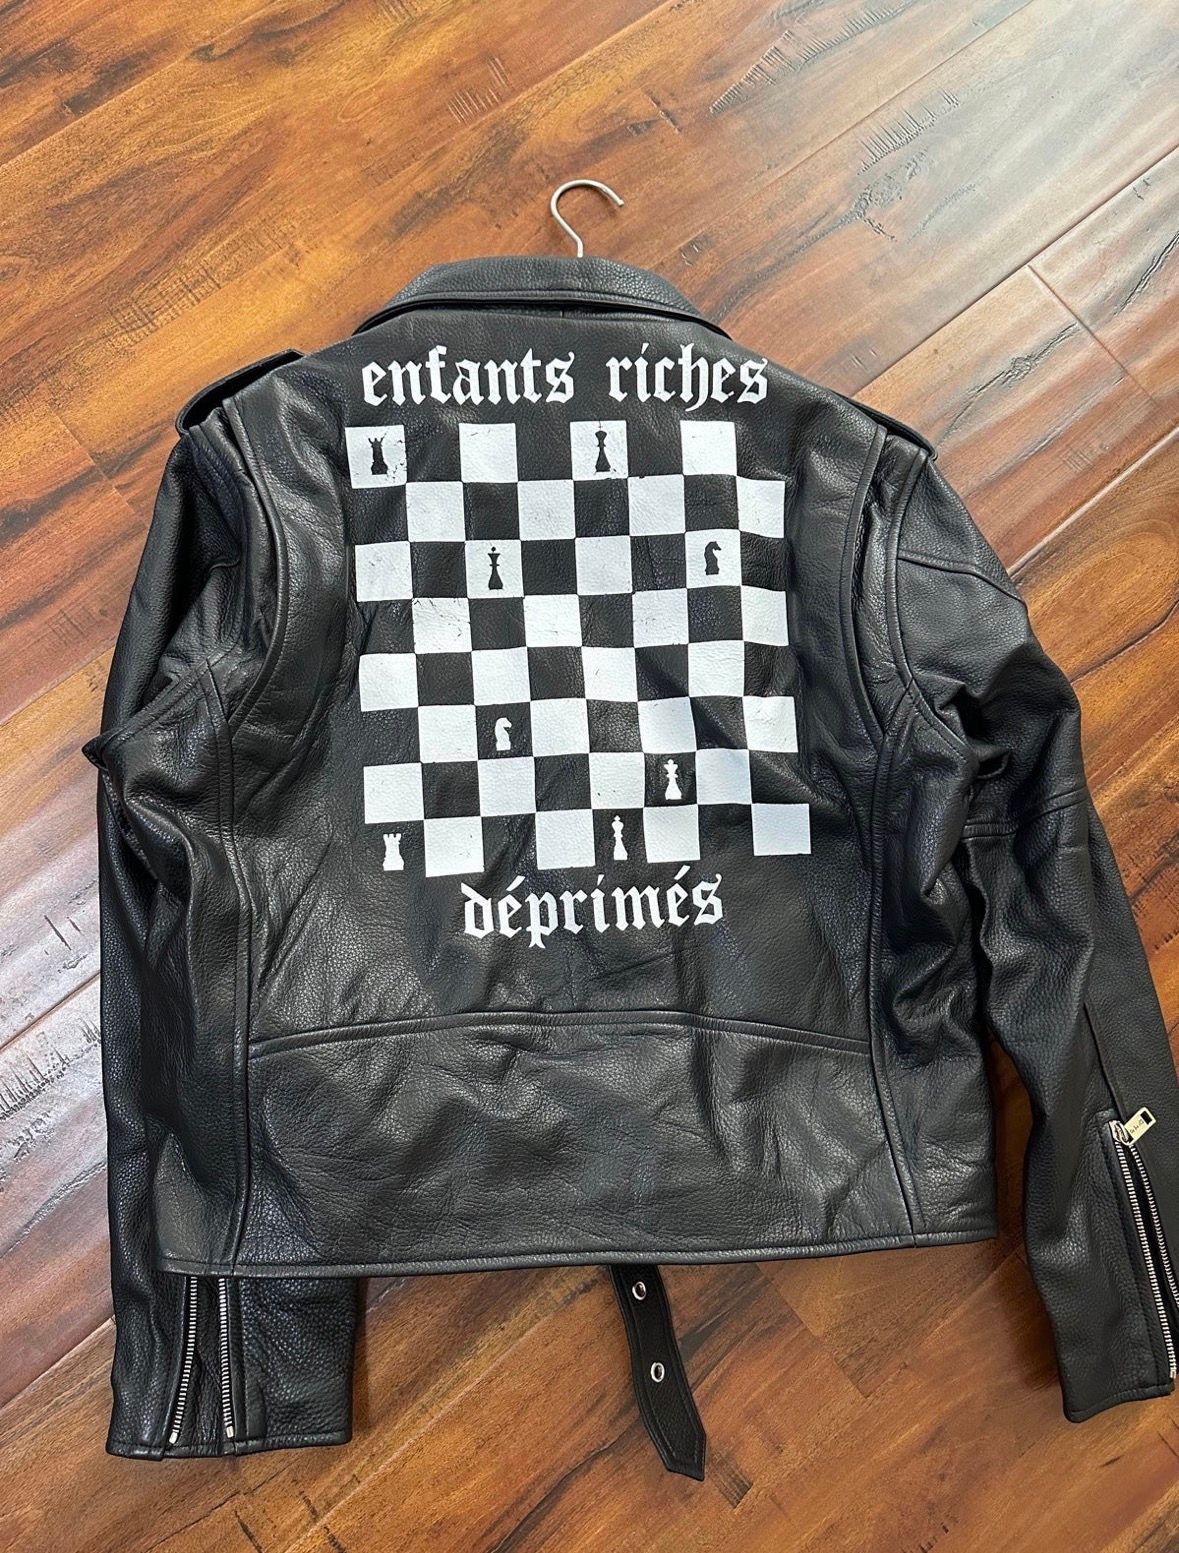 Pre-owned Enfants Riches Deprimes Erd Chessboard Leather Jacket In Black